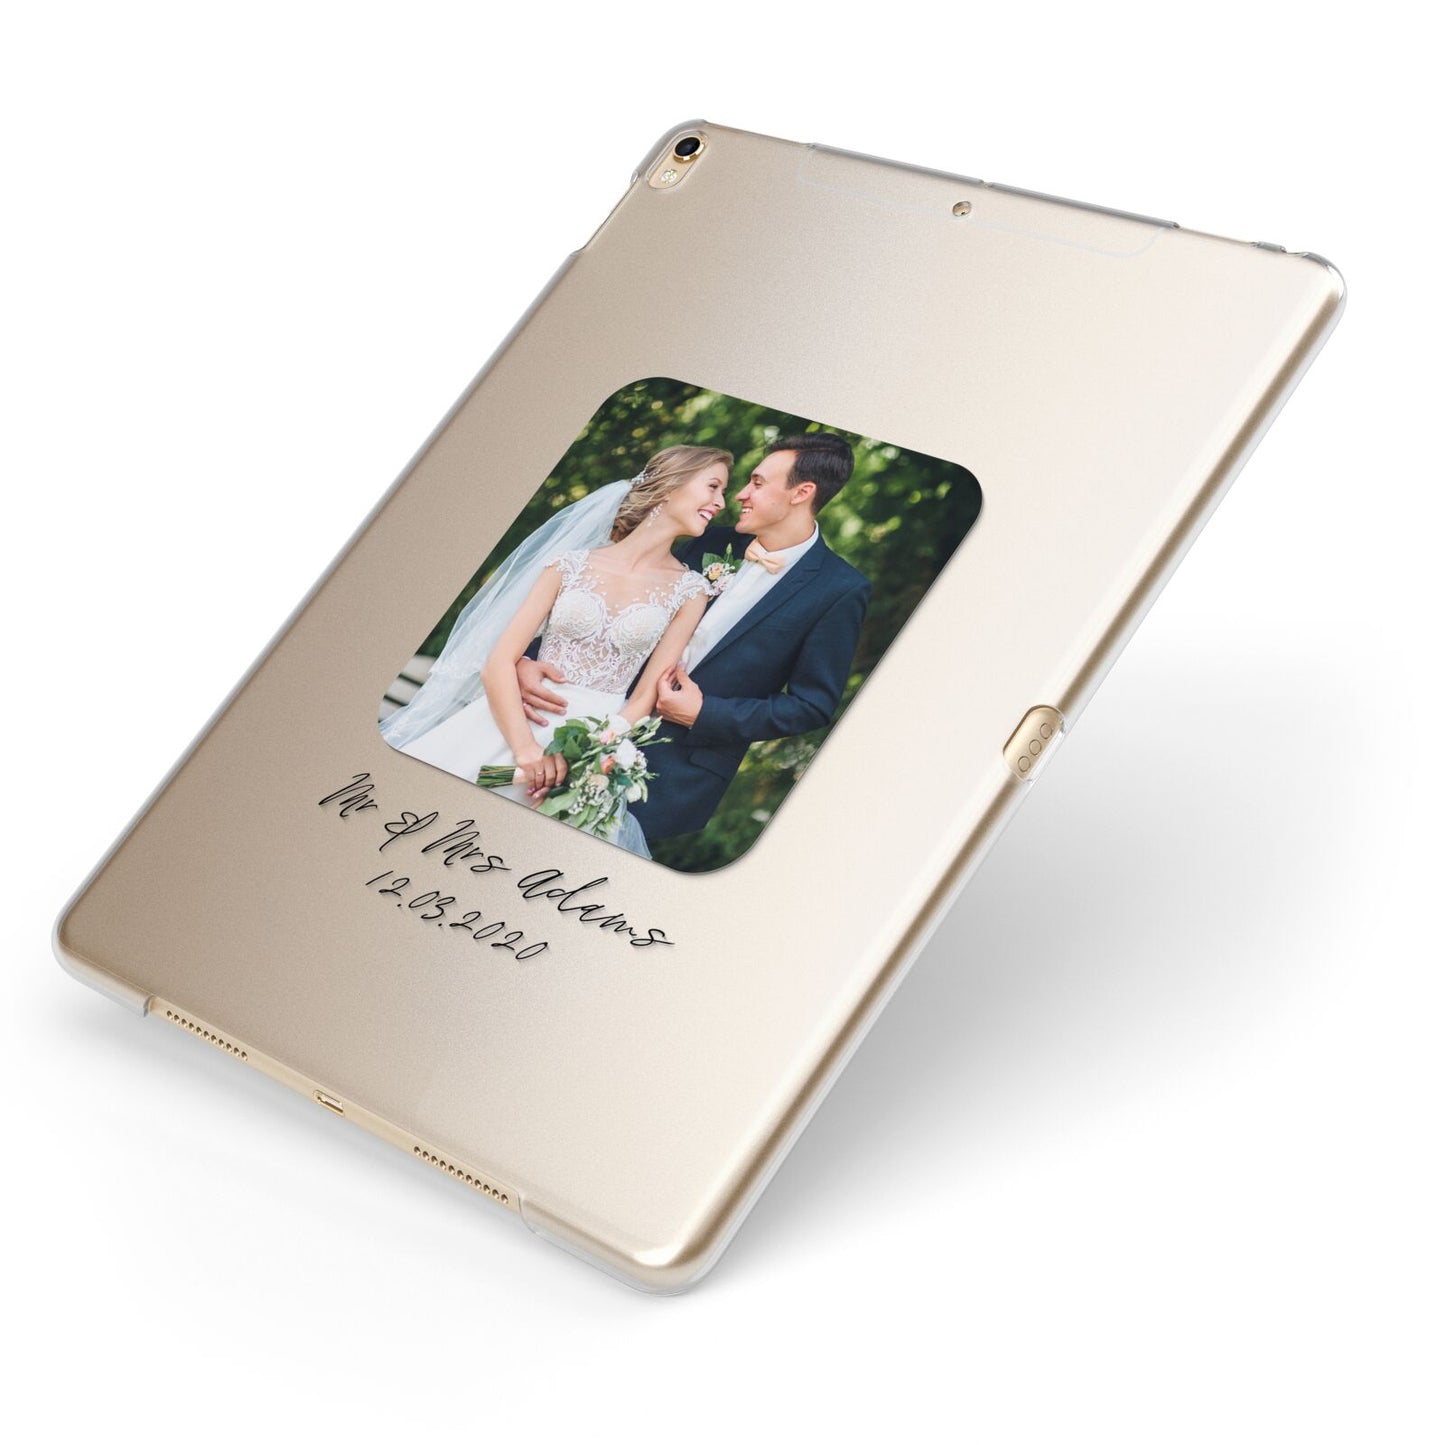 Wedding Photo Upload Keepsake with Text Apple iPad Case on Gold iPad Side View